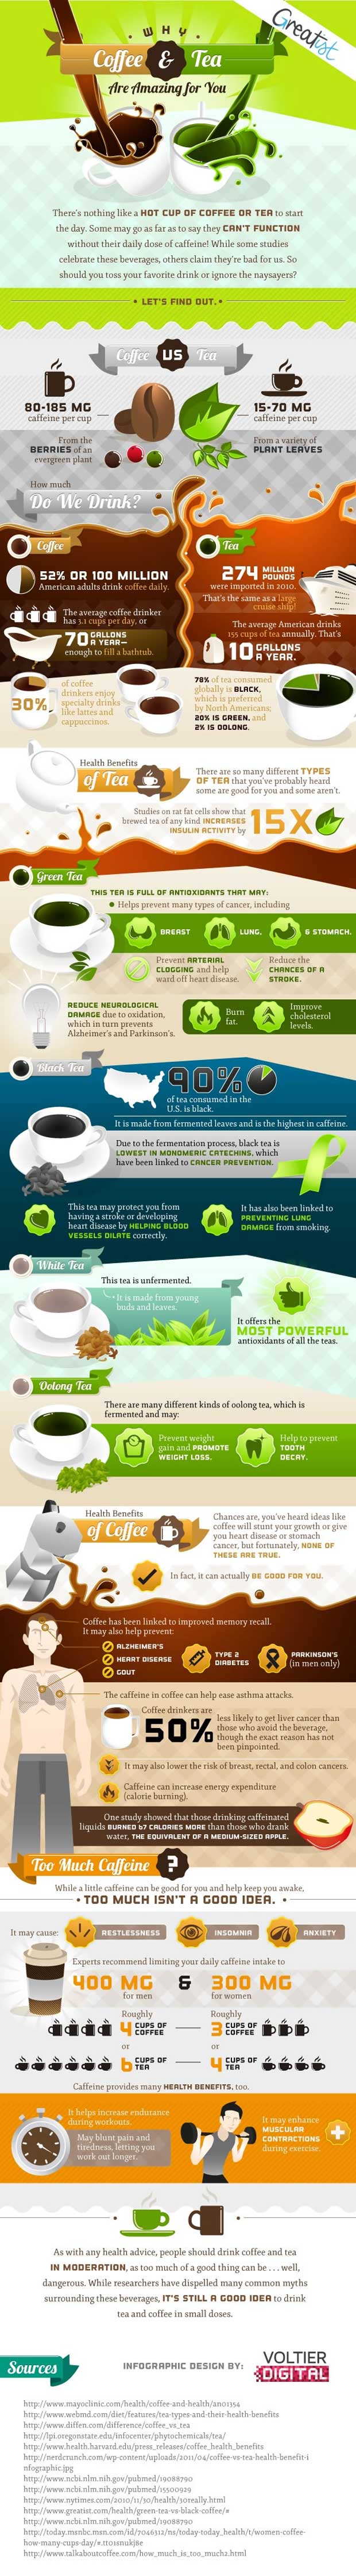 Heath benefits of coffee and tea infographic